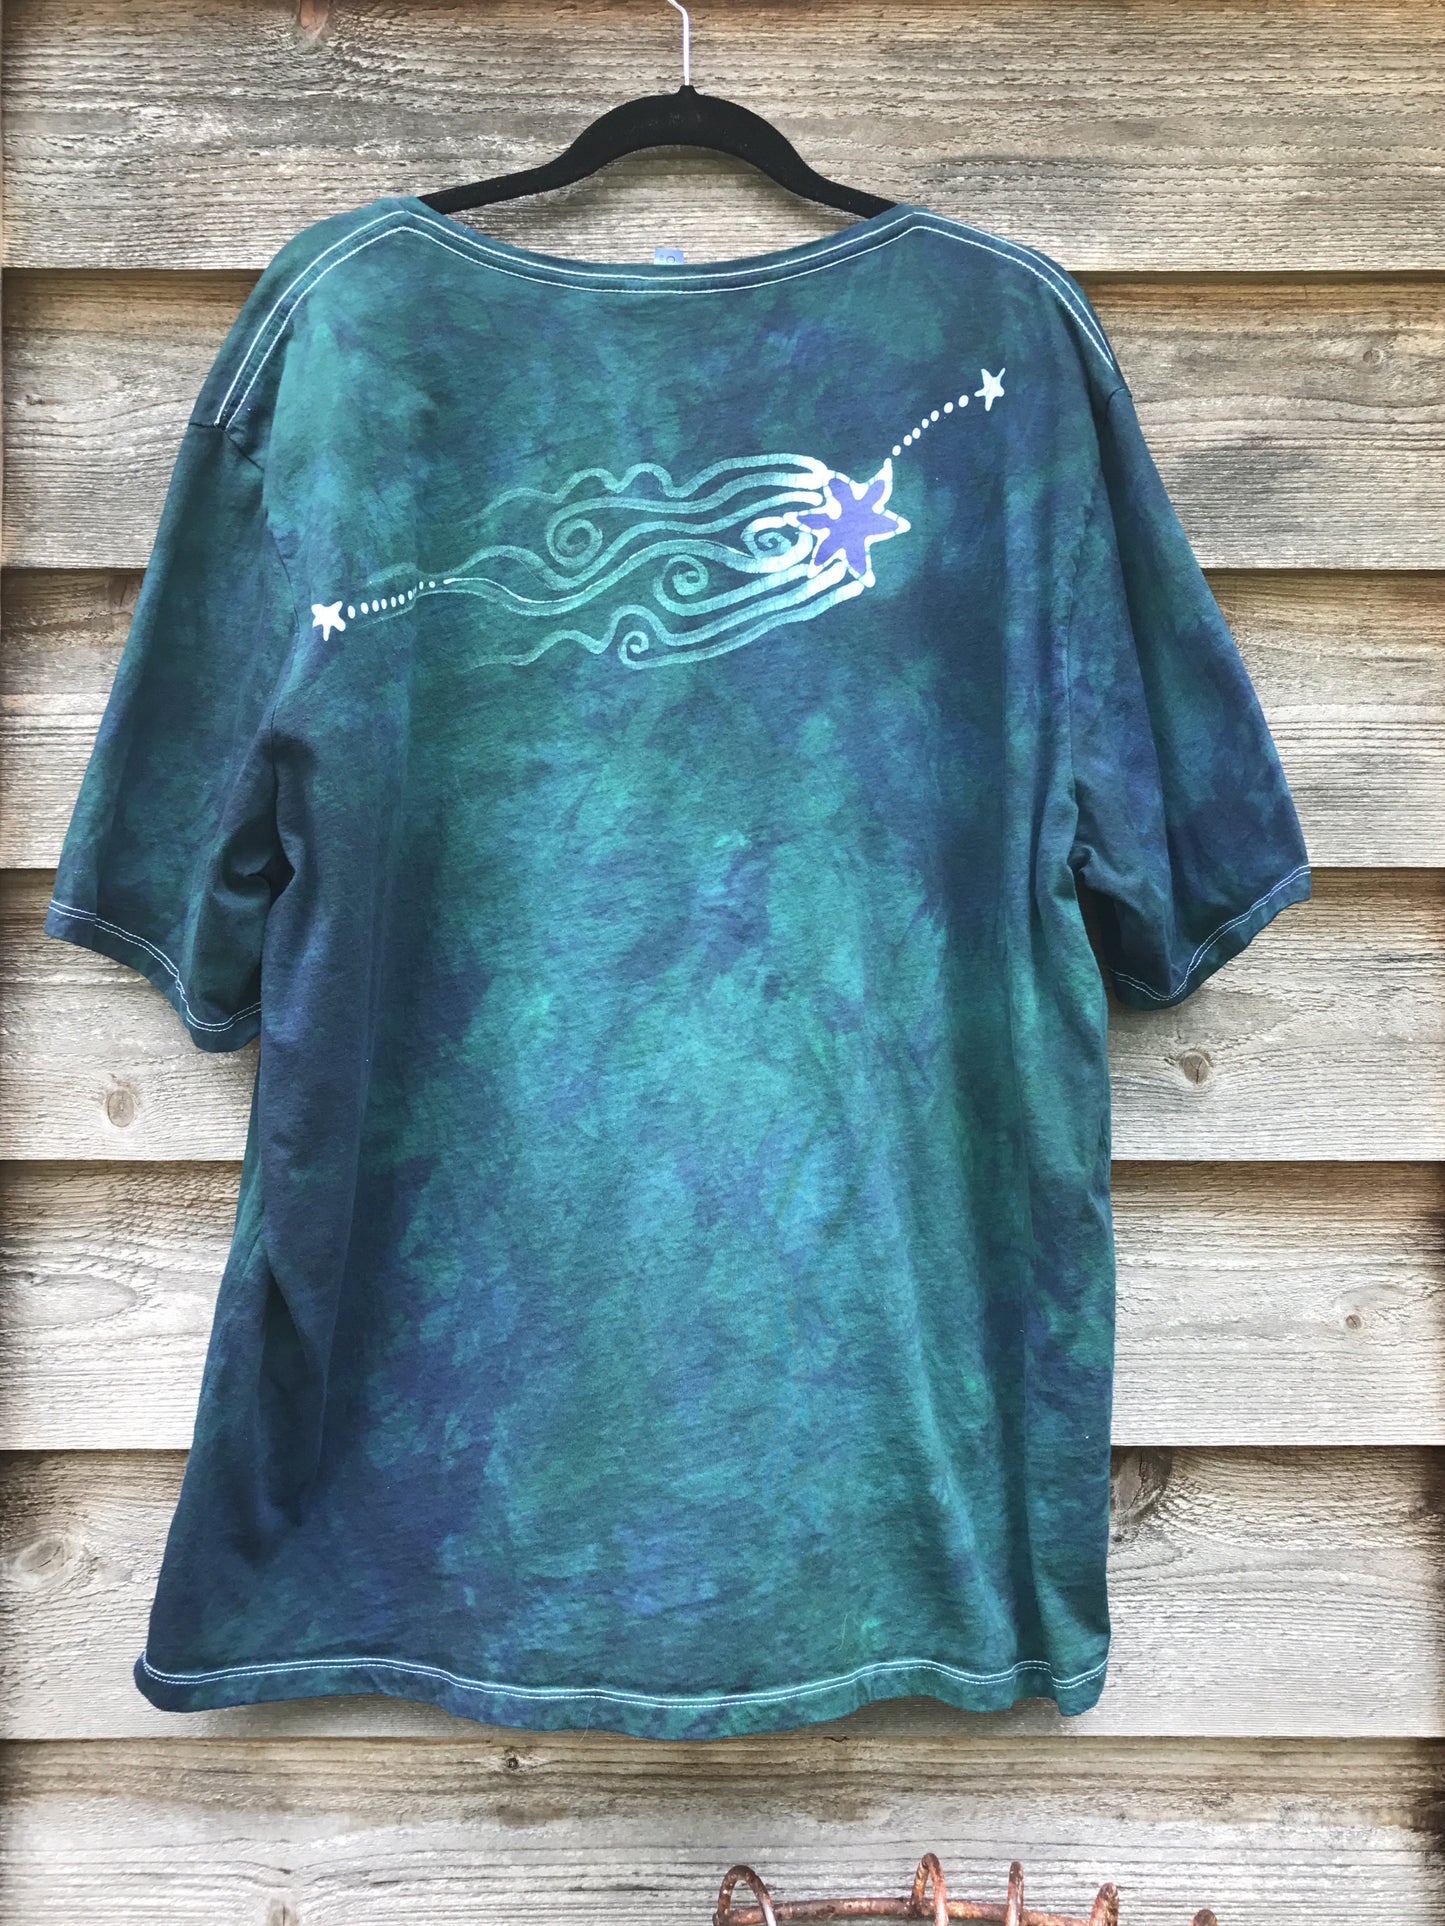 Teal and Purple Moonbeams Handmade Batik Scoop Neck Tshirt - Size 2X